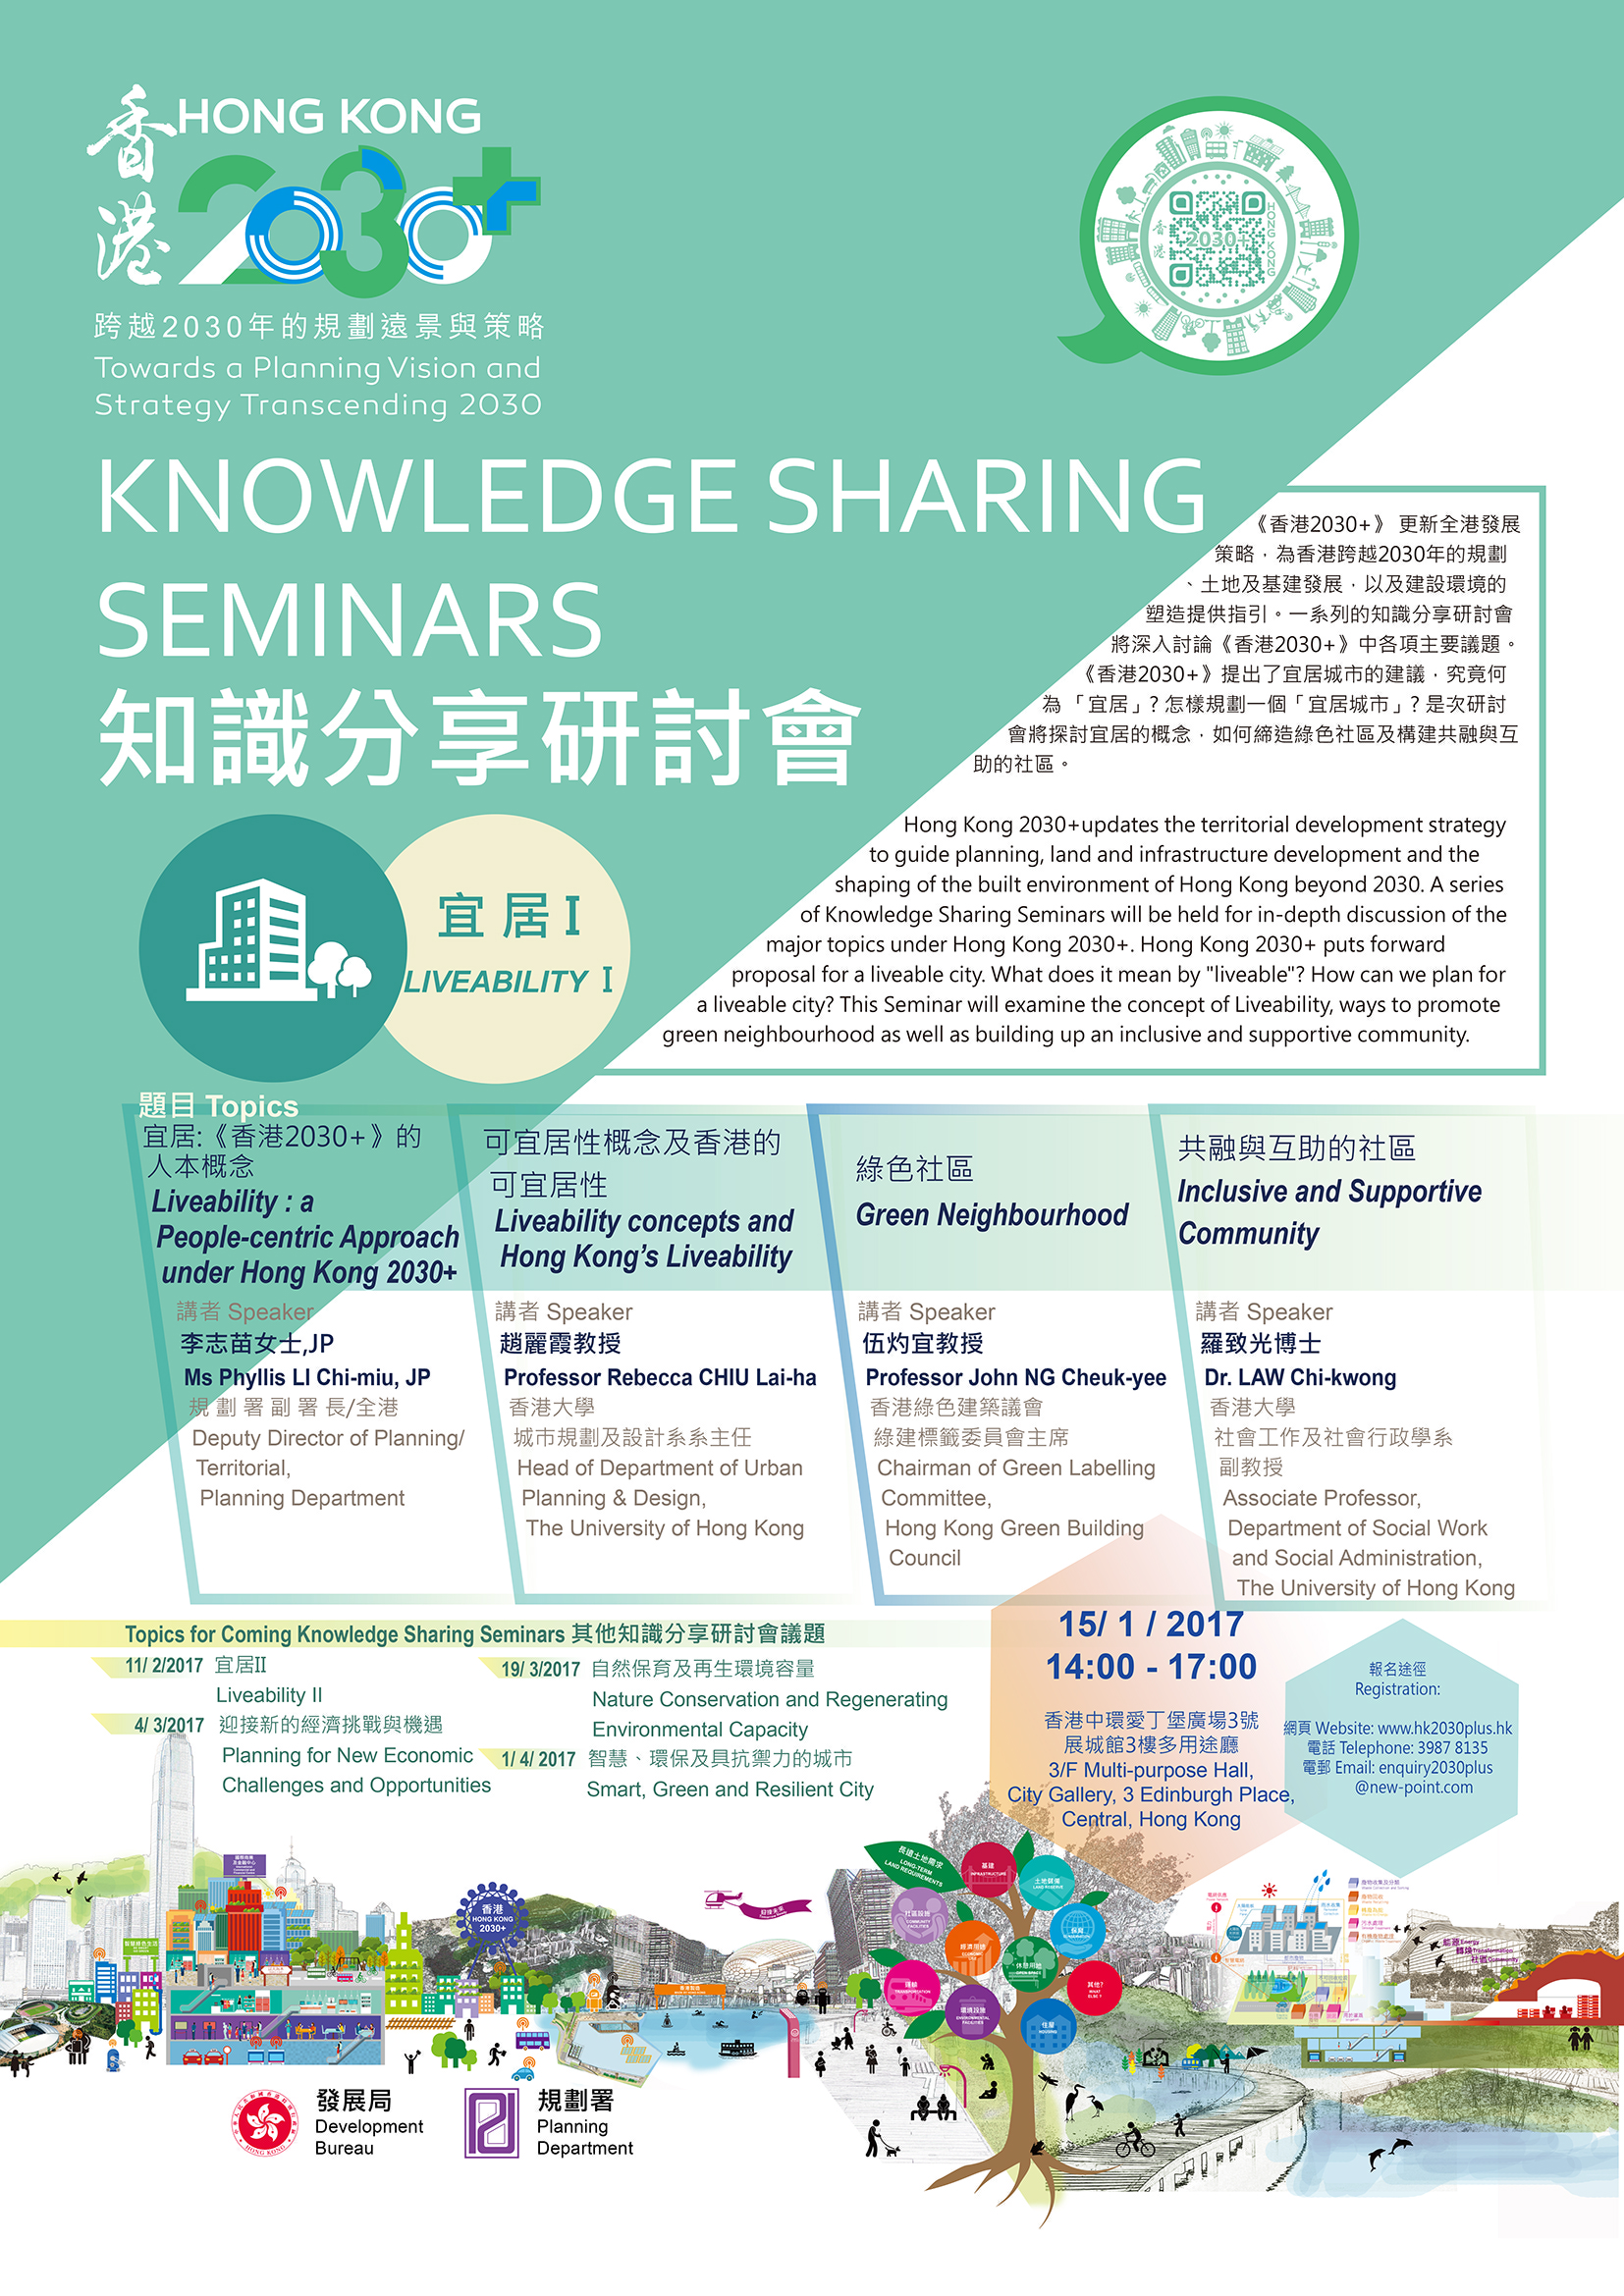 Knowledge Sharing Seminar - Liveability I (15/1/2017)